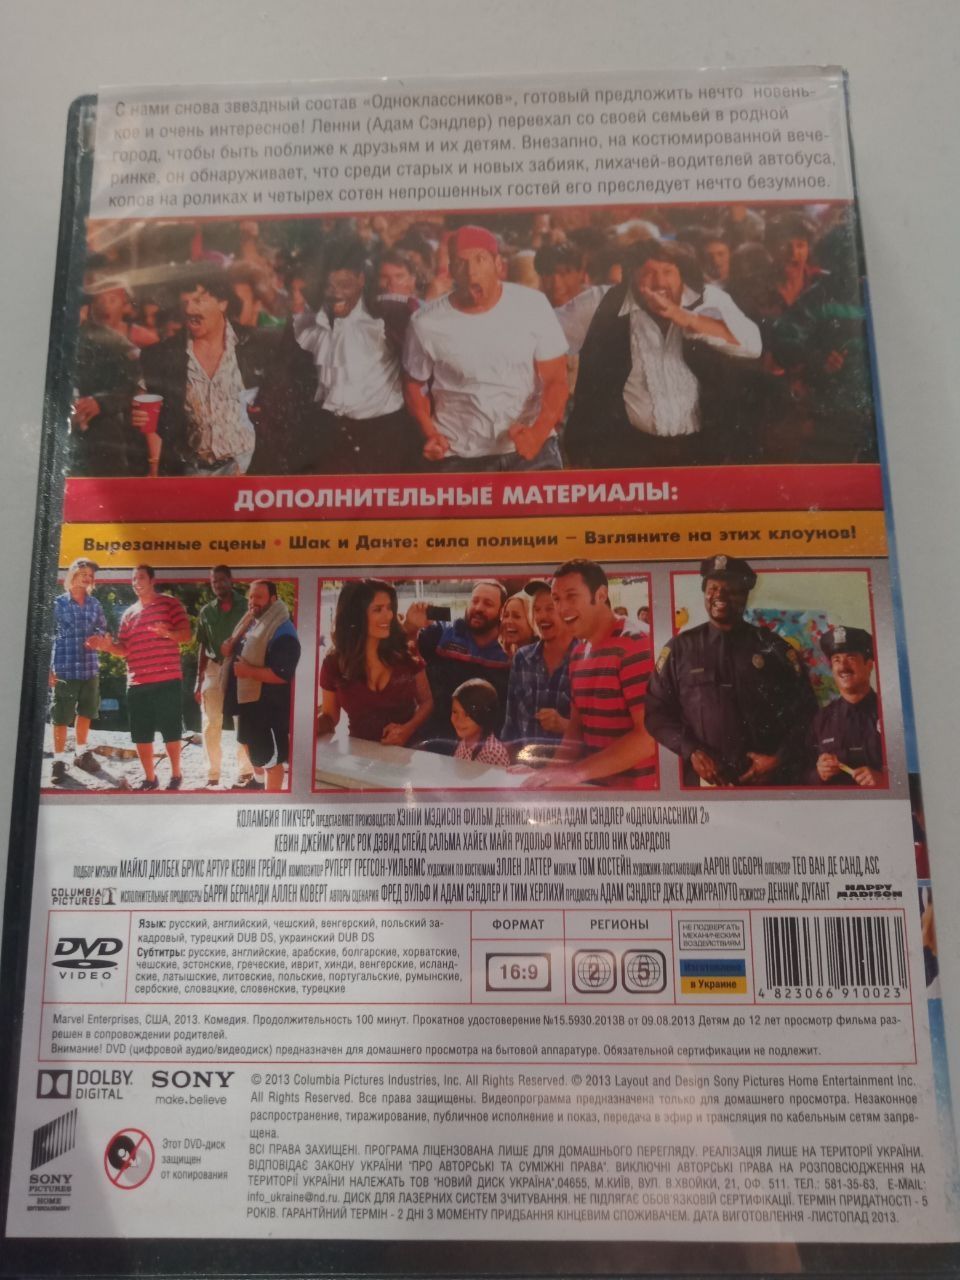 Одноклассники 2 [DVD]